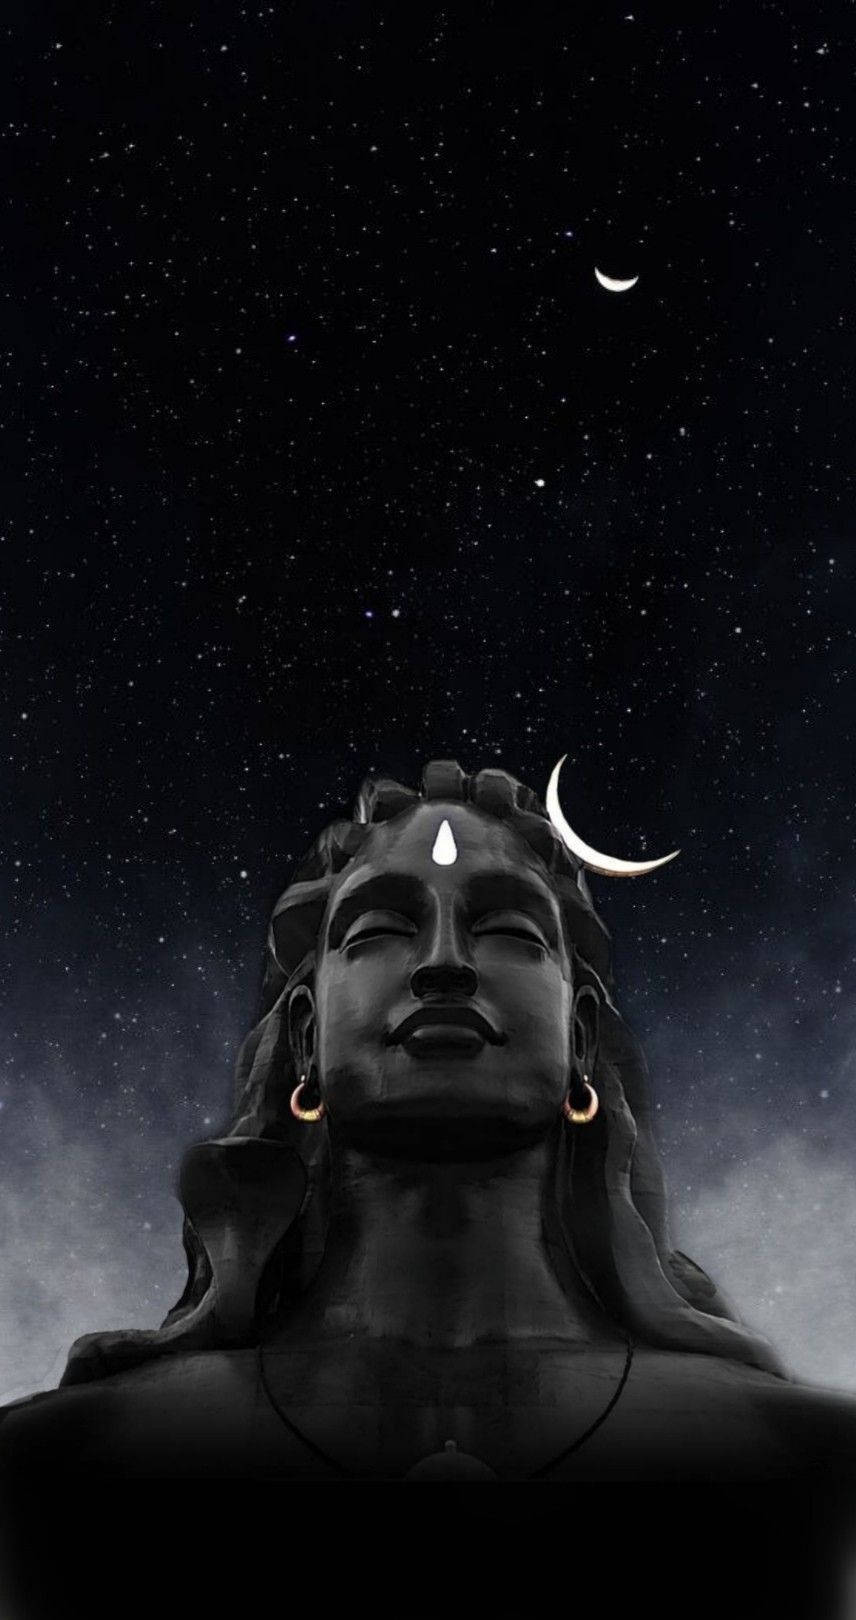 Free Shiva Black Wallpaper Downloads, [100+] Shiva Black Wallpapers for  FREE 